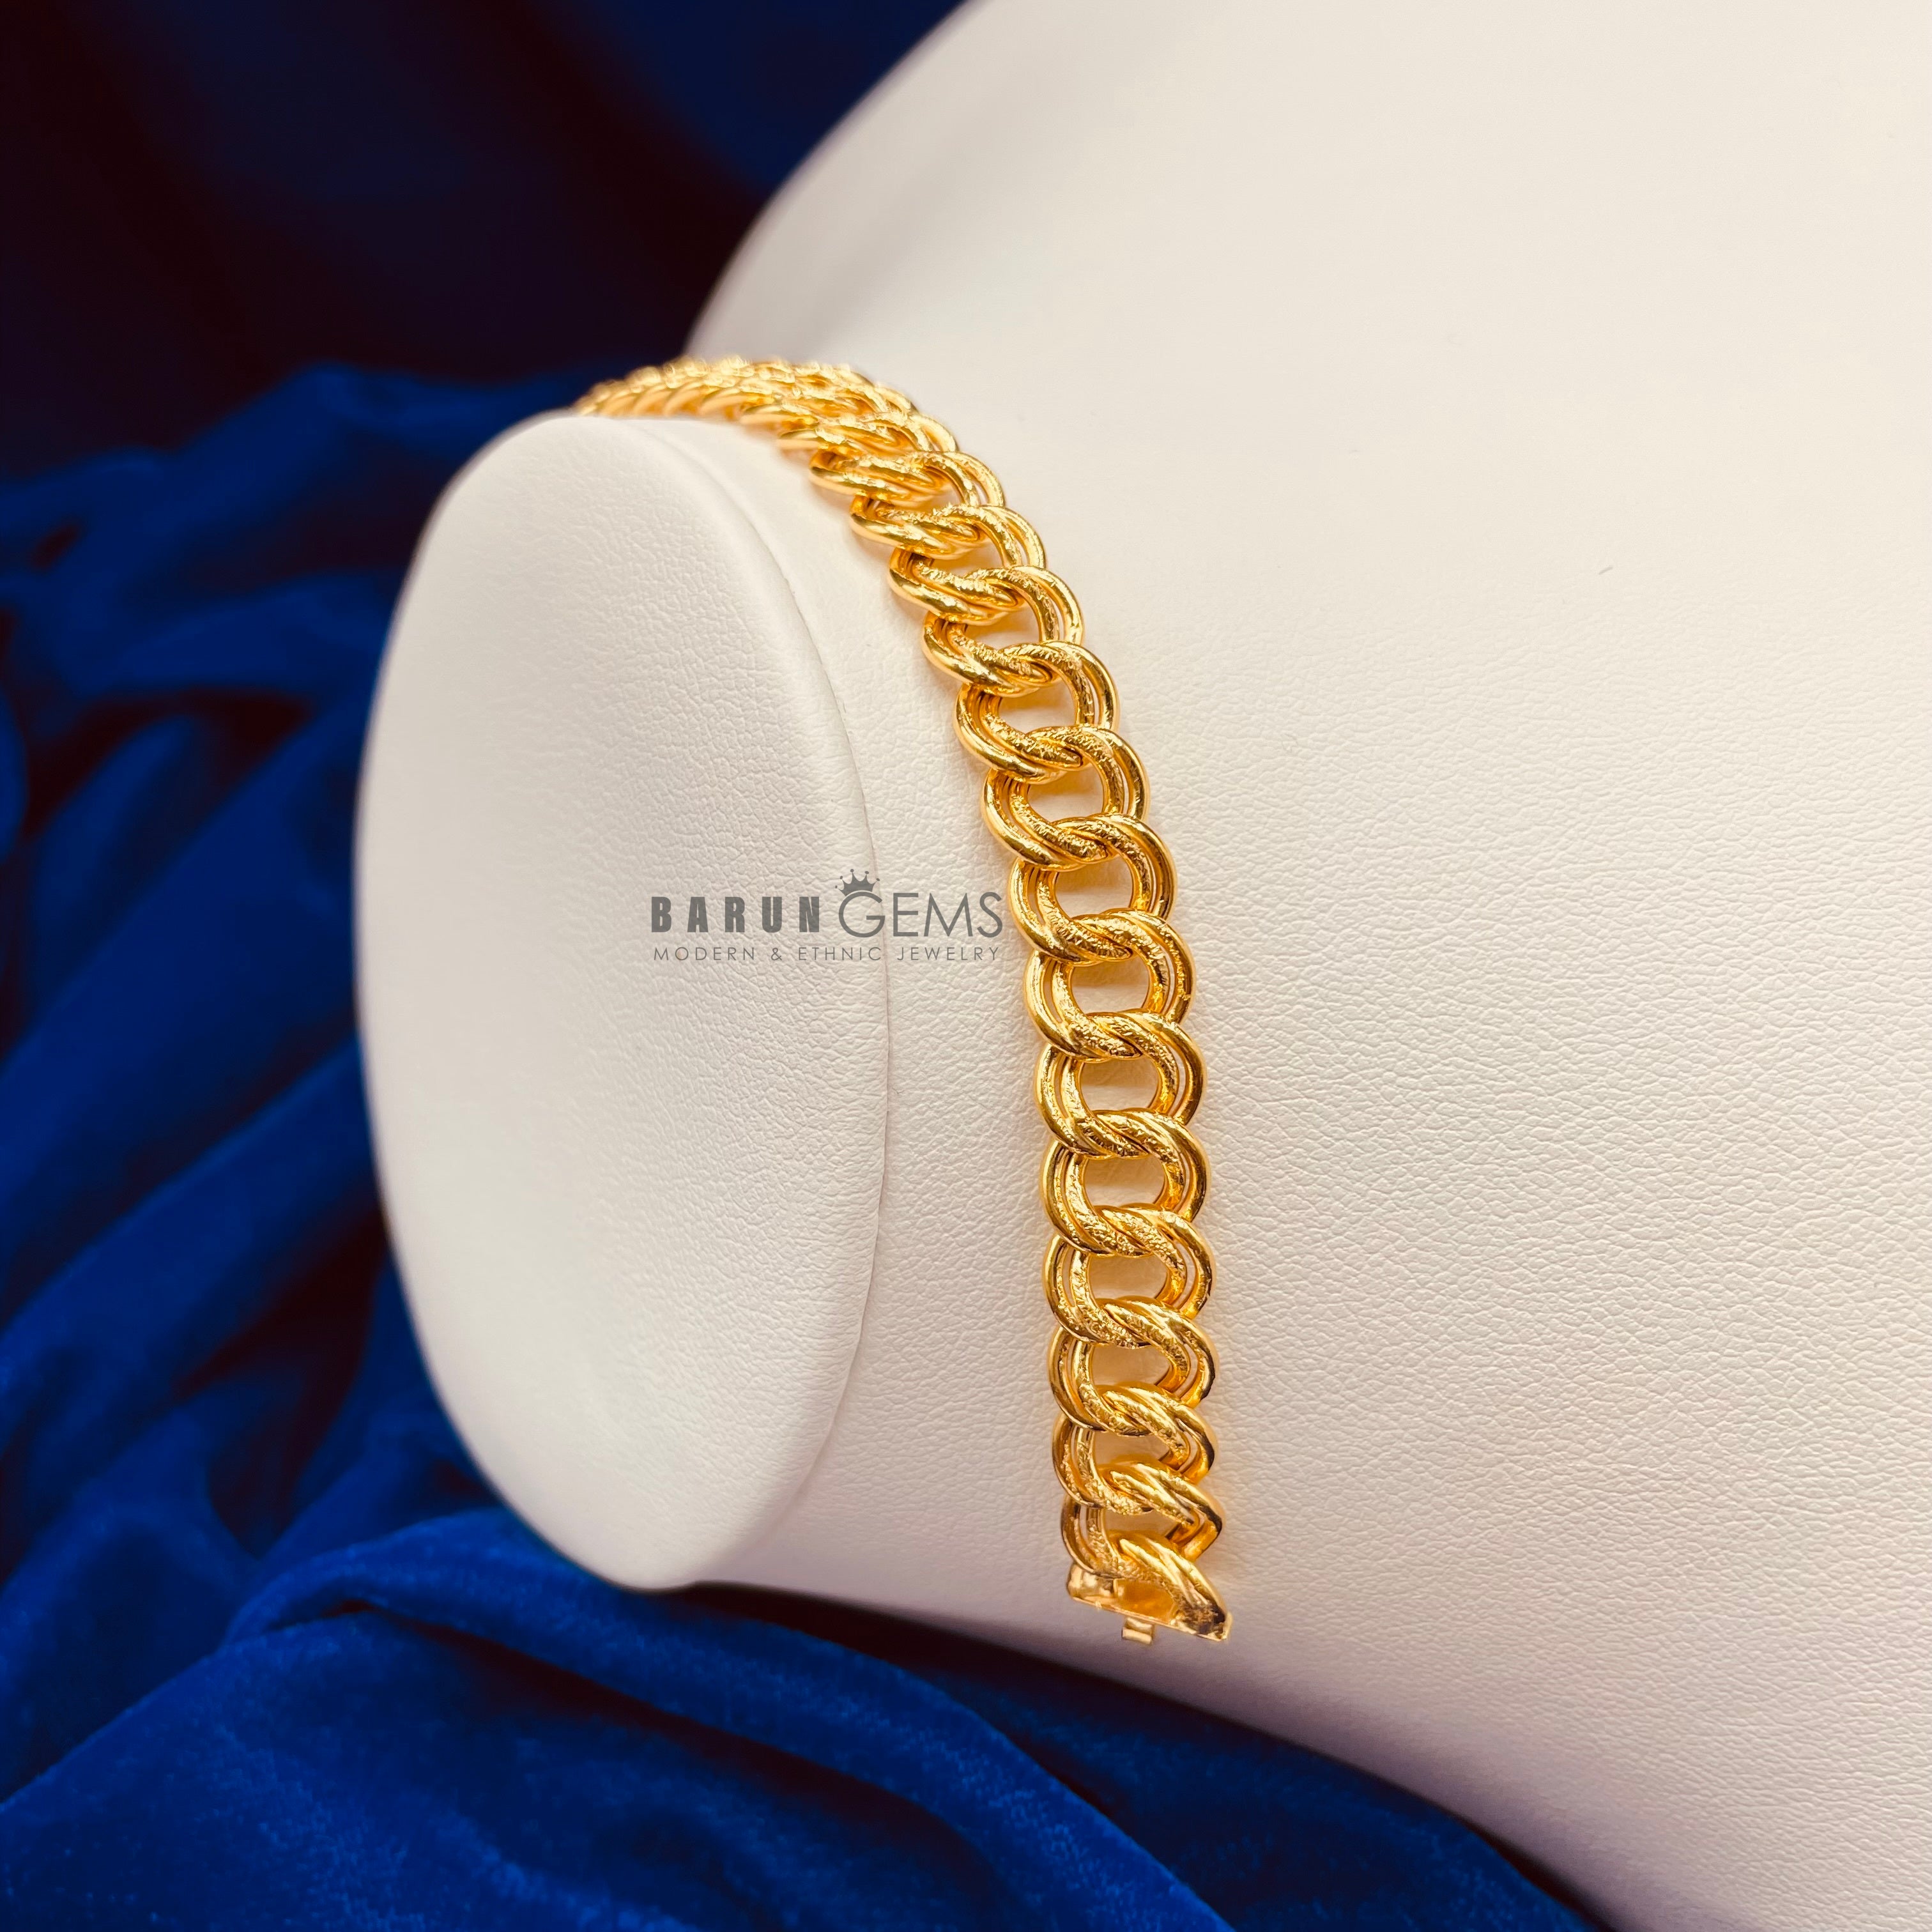 22k Gold Bracelet | Barun Gems | Reviews on Judge.me